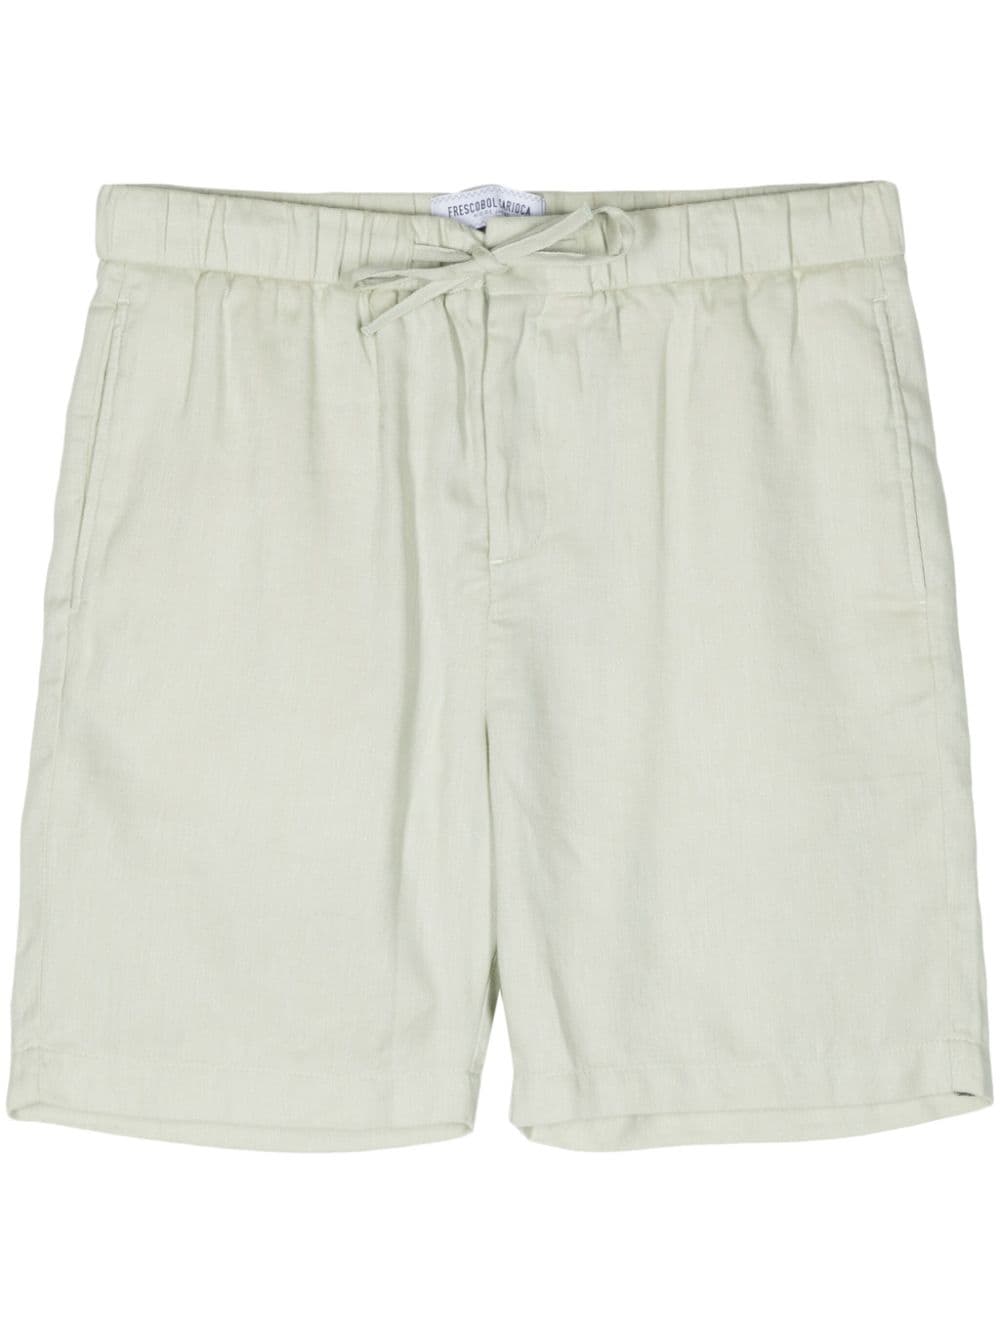 Felipe cotton-linen shorts